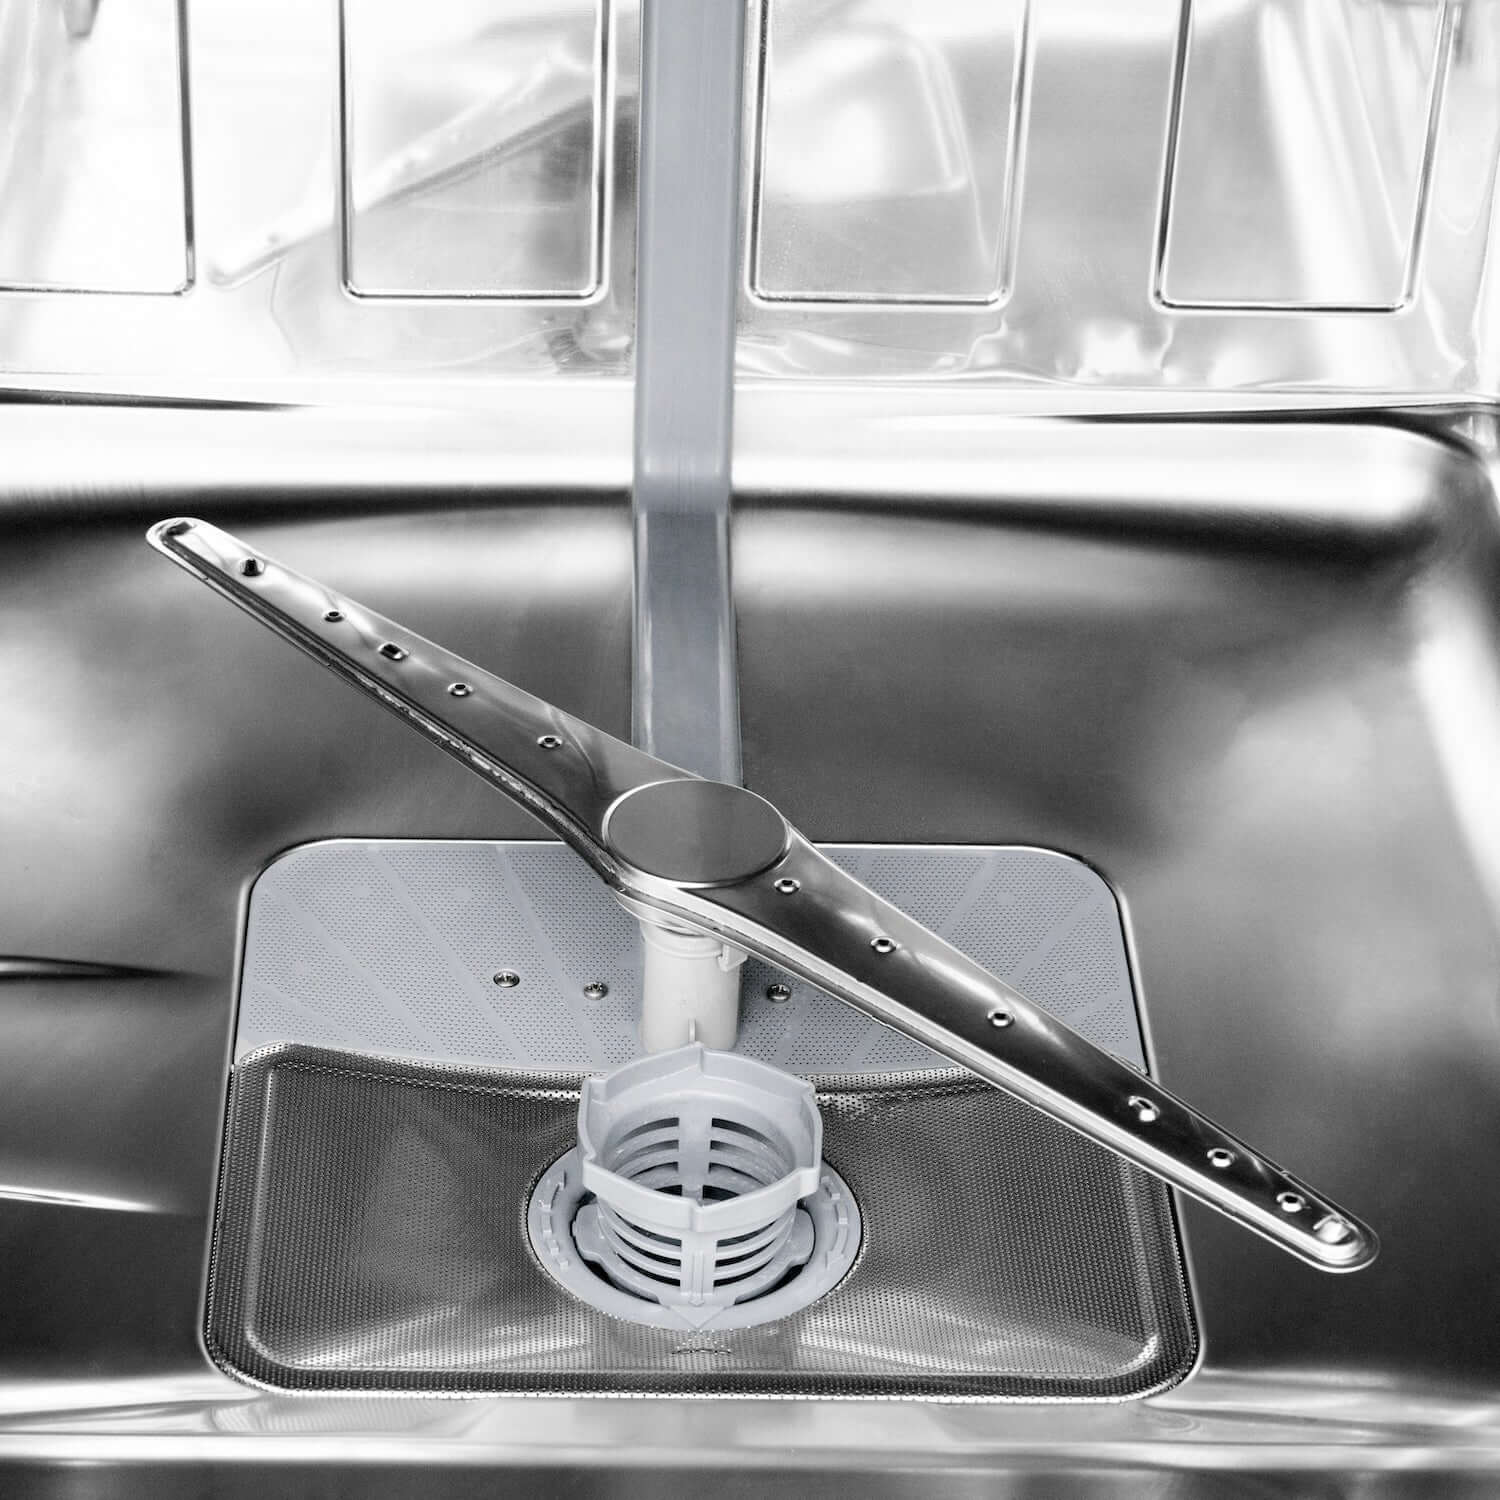 ZLINE Dishwasher bottom sprayer inside stainless steel tub.